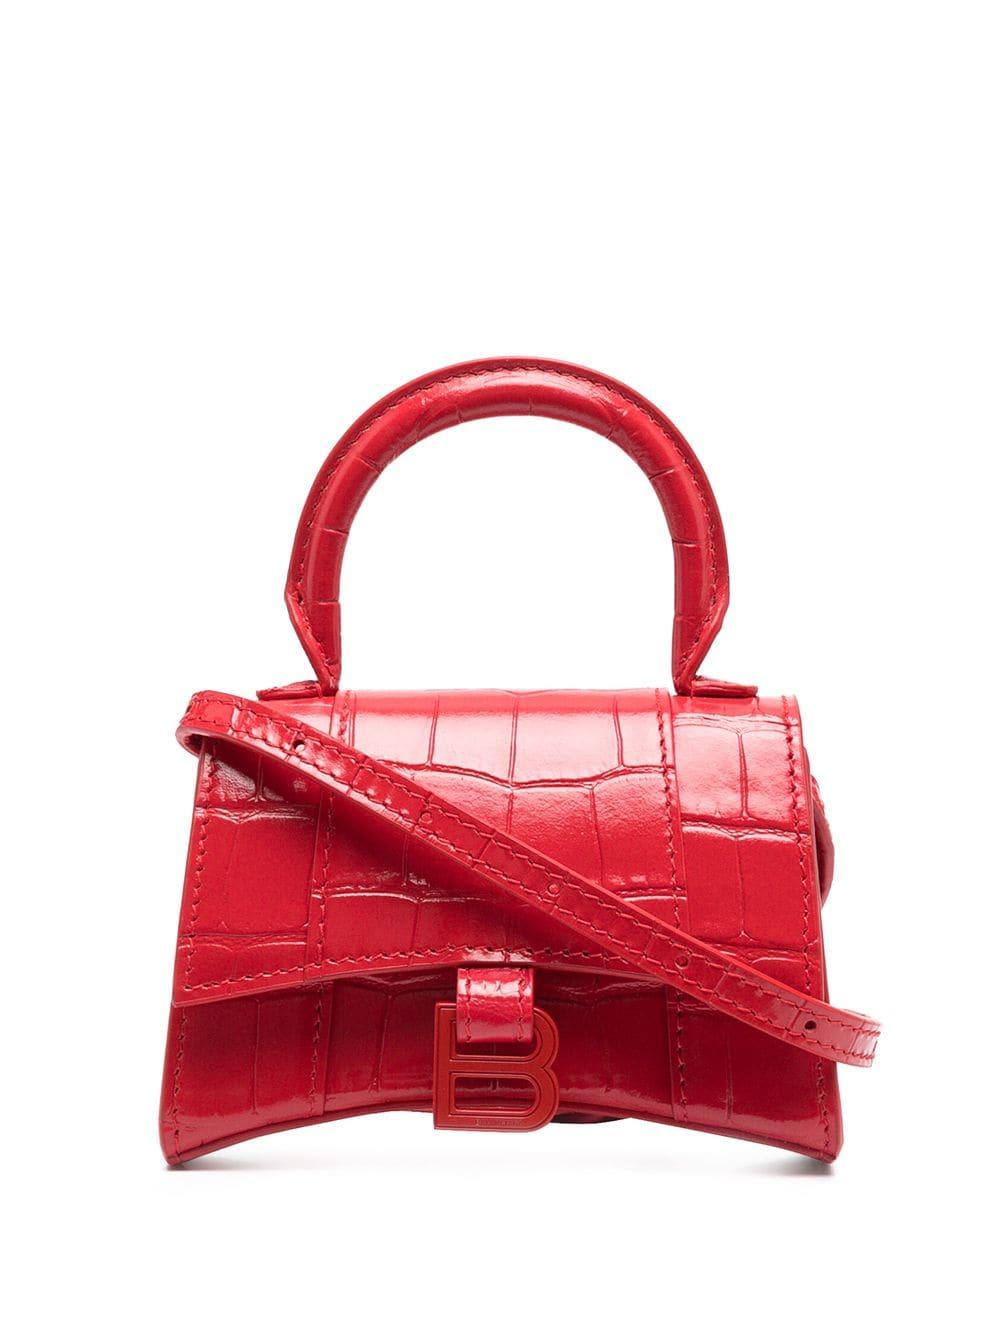 Balenciaga Leather Mini Hourglass Tote Bag in Red | Lyst